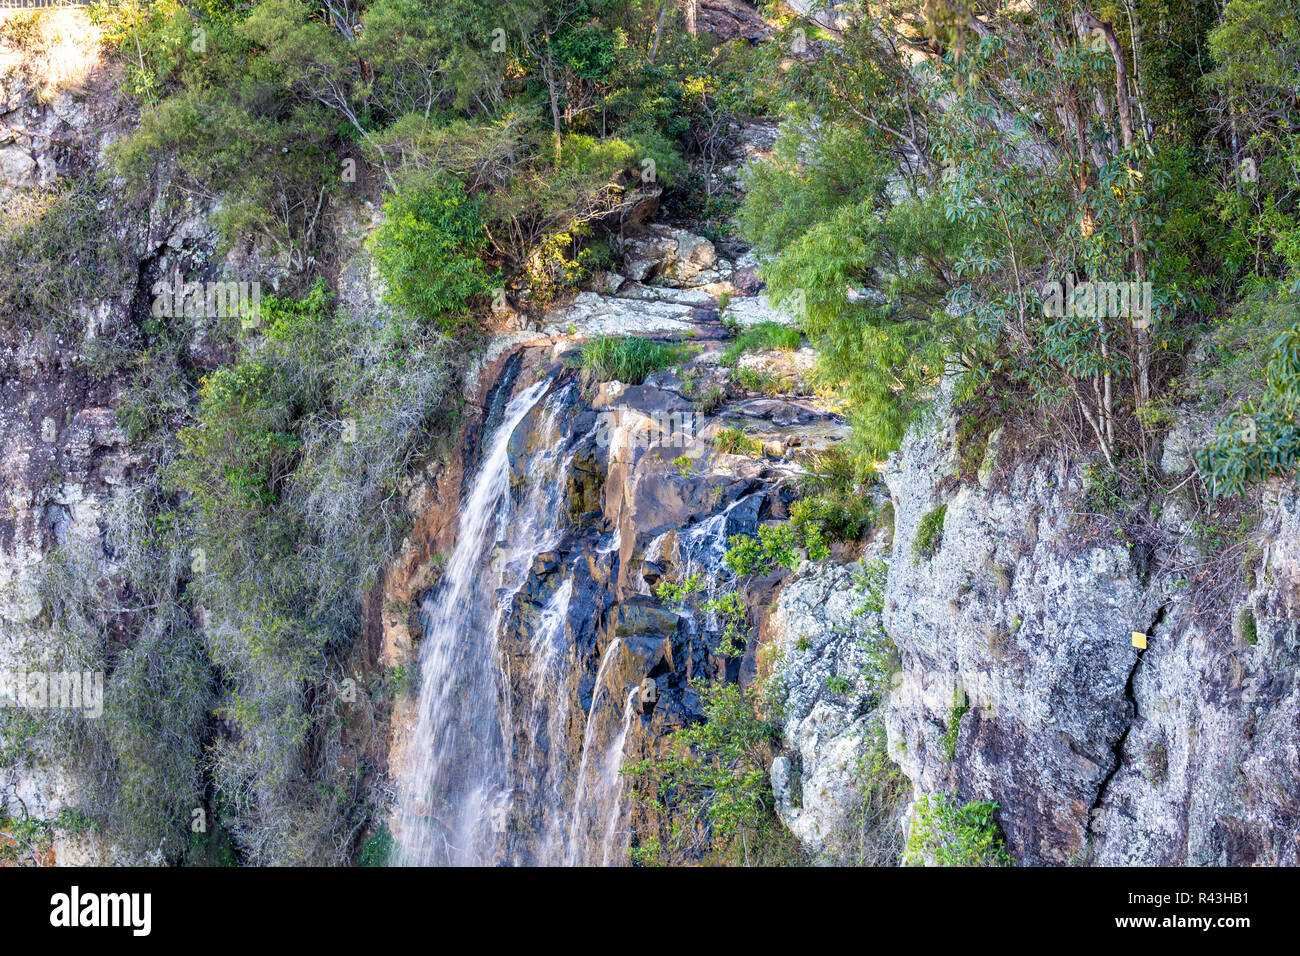 Furlong brook cascade dans le parc national de Springbrook, Gold Coast hinterland,Queensland, Australie Banque D'Images